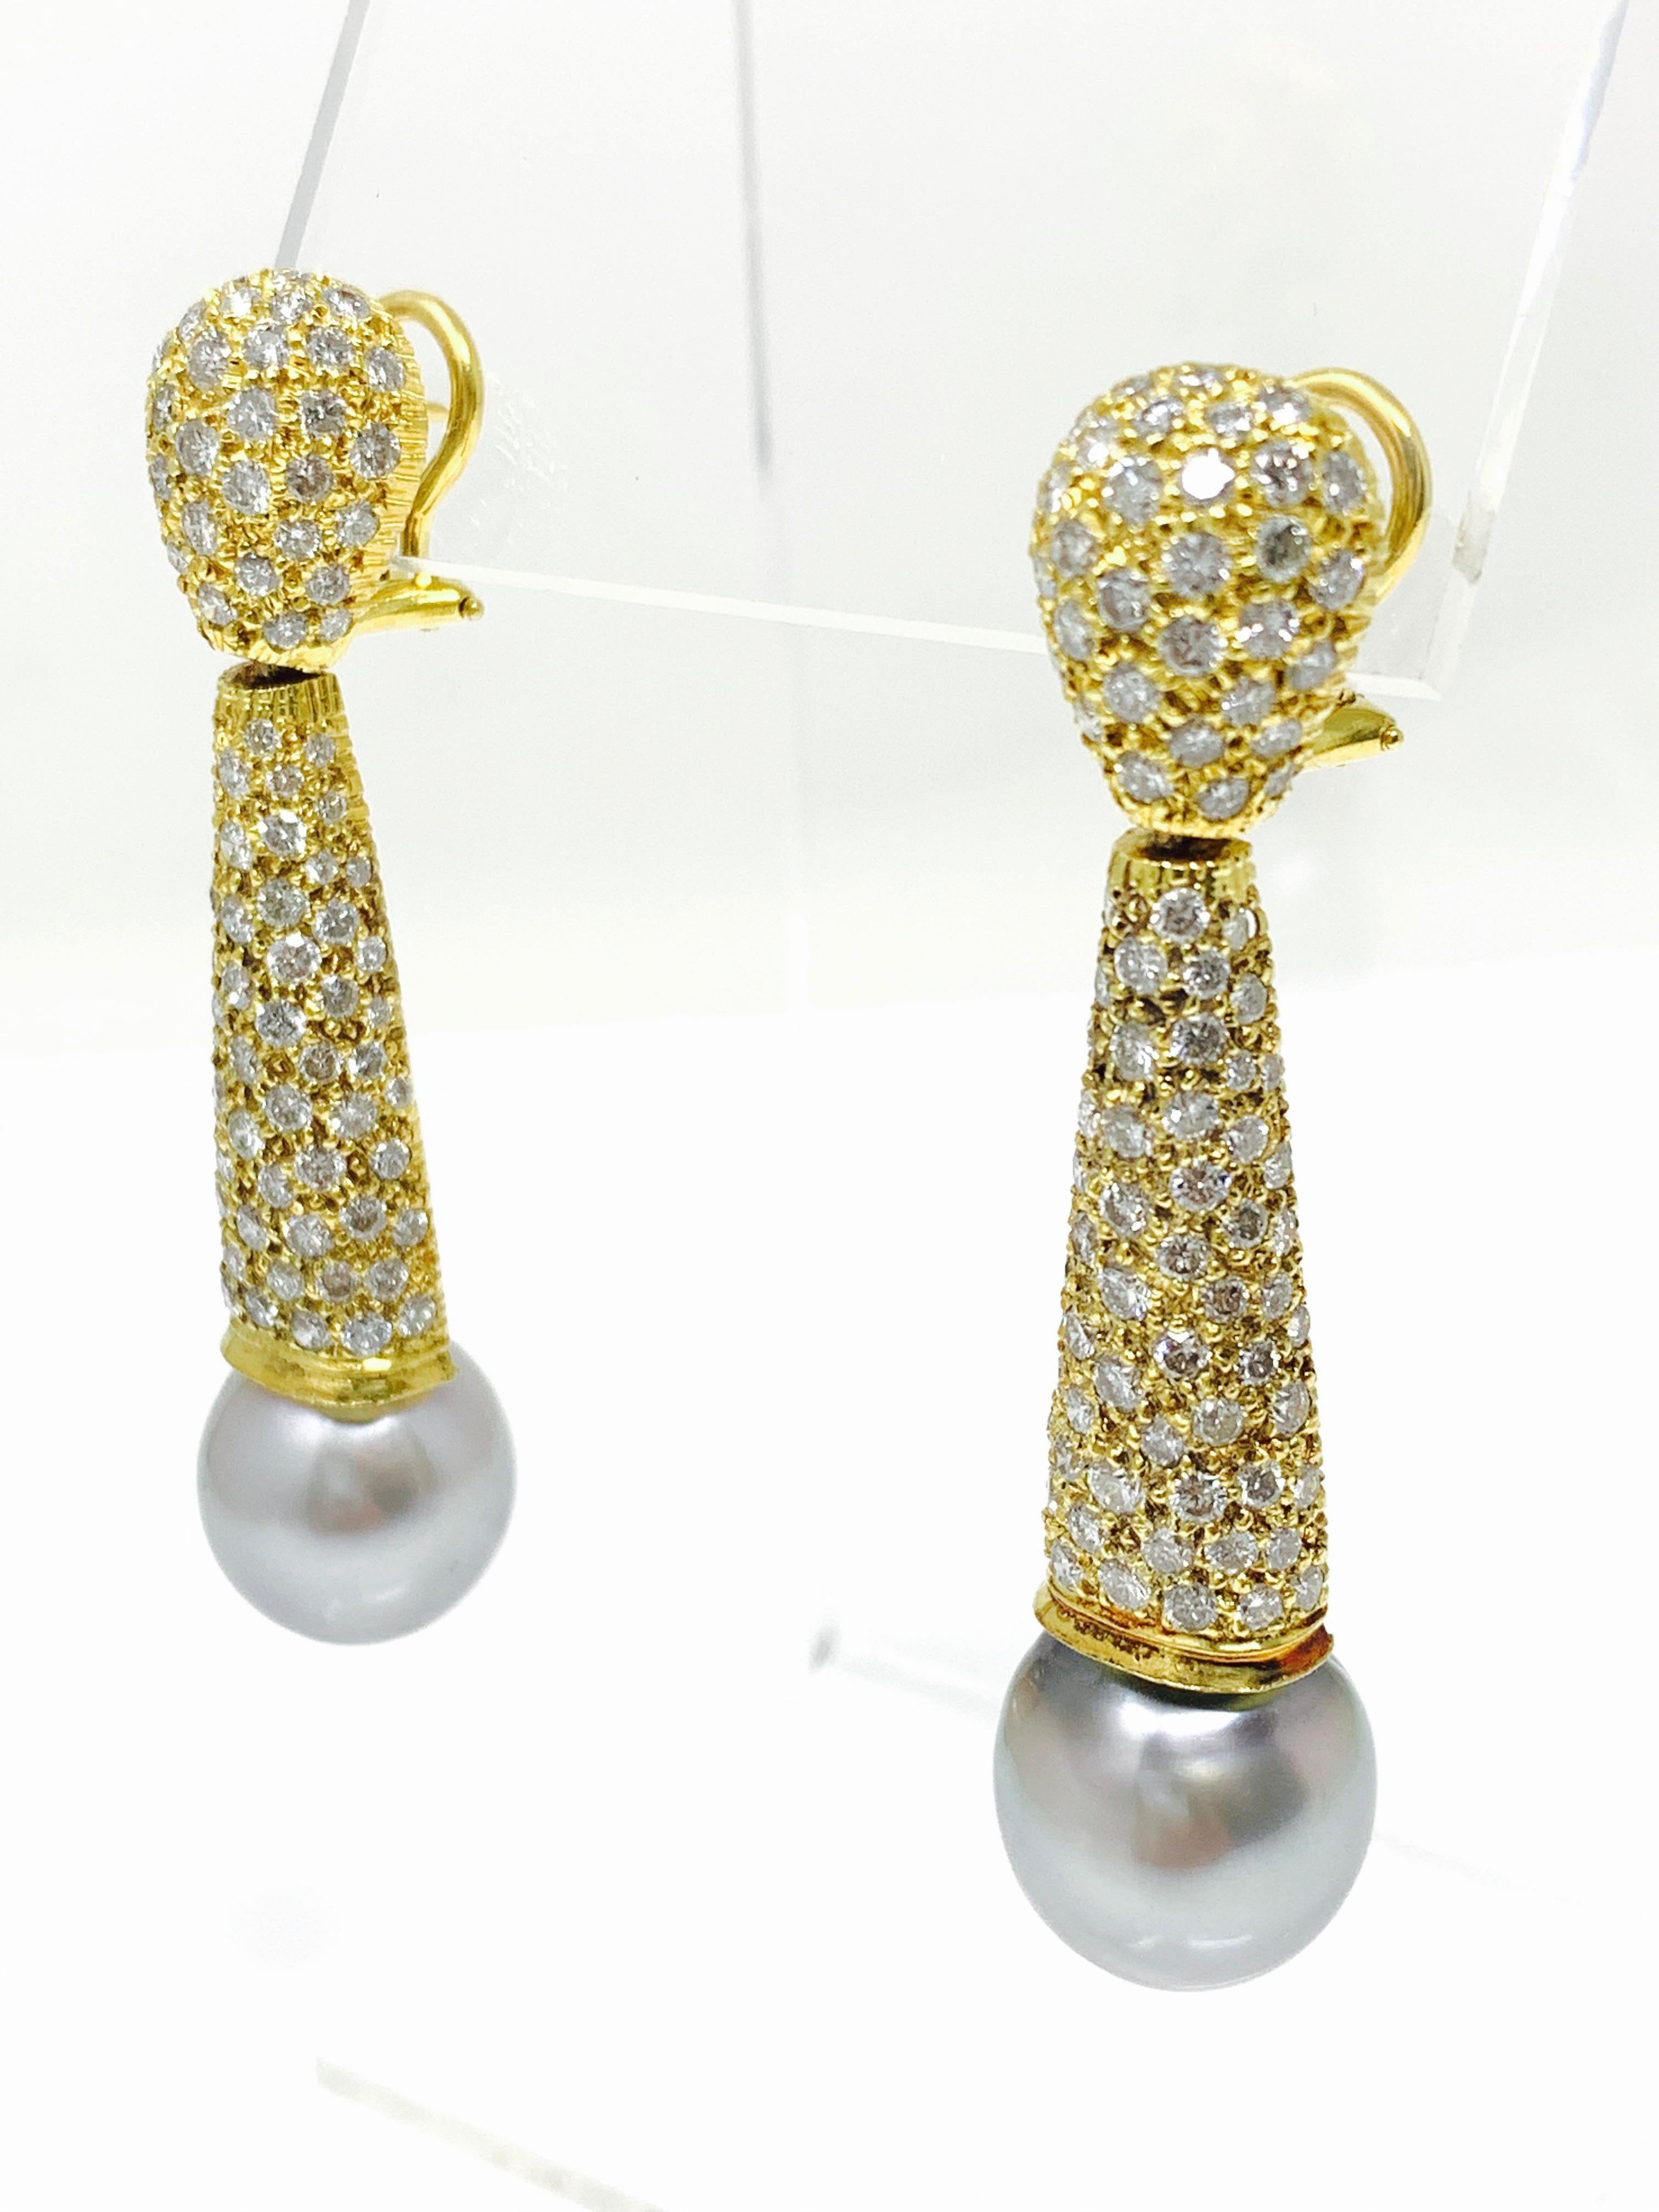 white gold pearl earrings